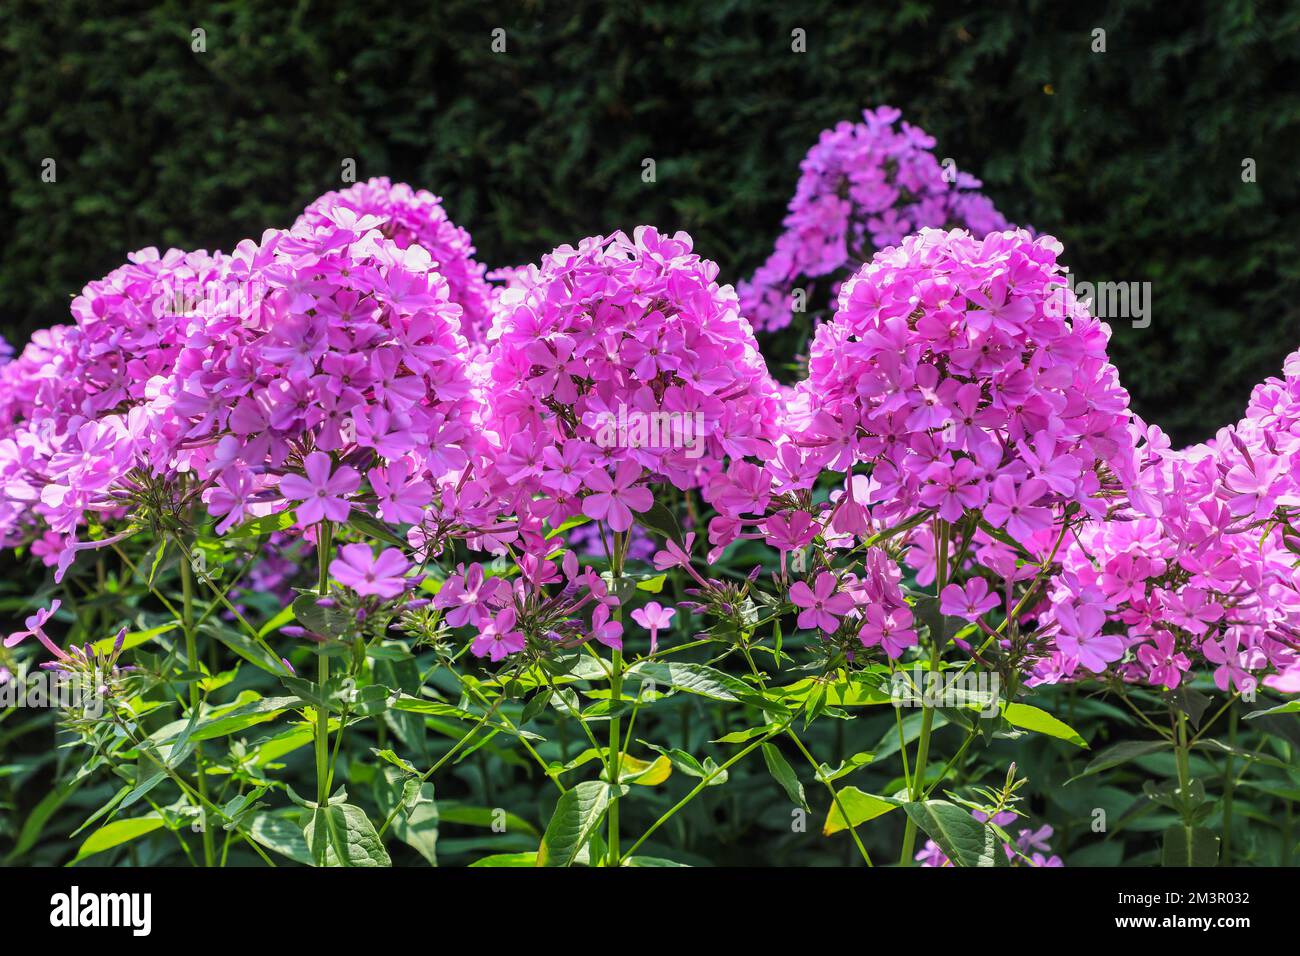 The pink purple flower heads of Phlox paniculata, Fall Phlox, or Perennial Phlox, England, UK Stock Photo